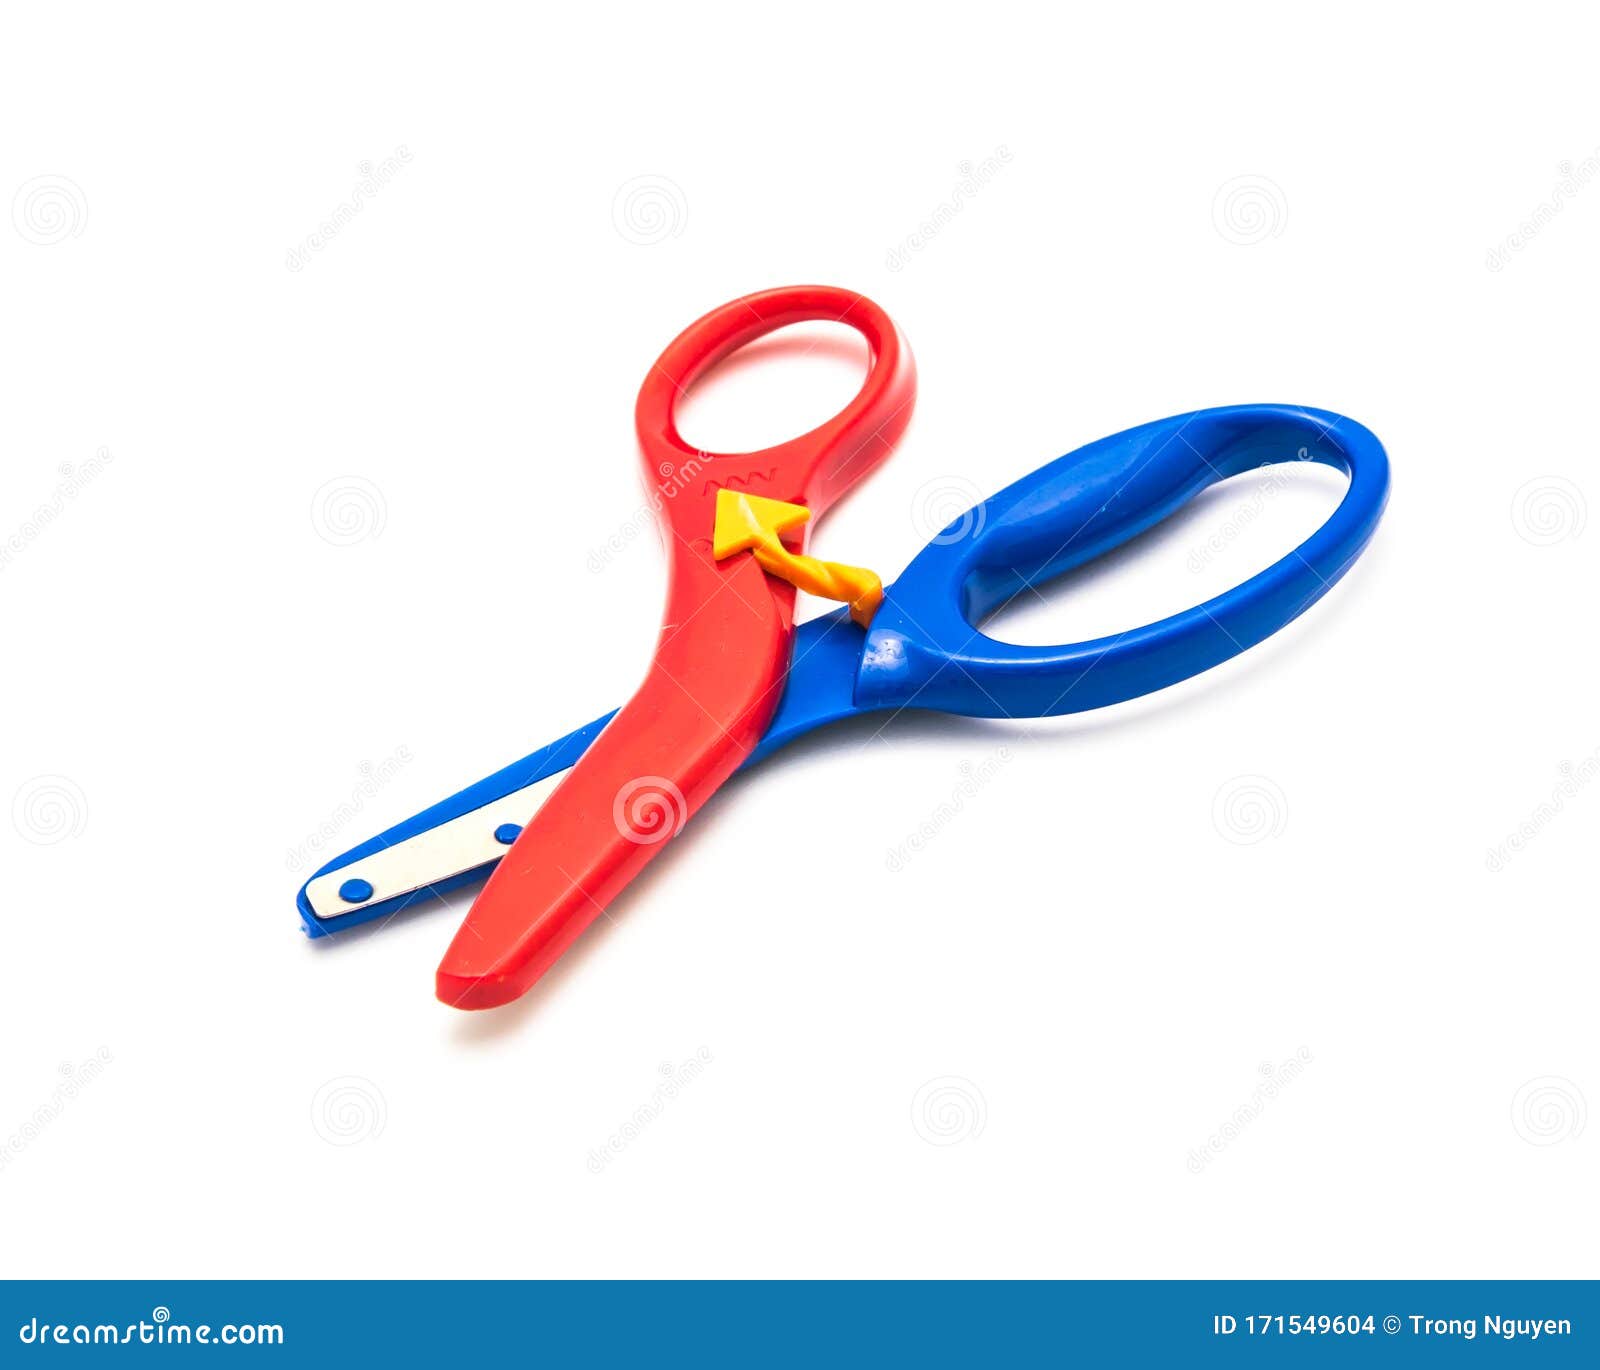 https://thumbs.dreamstime.com/z/preschool-scissors-training-lever-kids-isolated-white-to-open-blade-each-cut-background-171549604.jpg